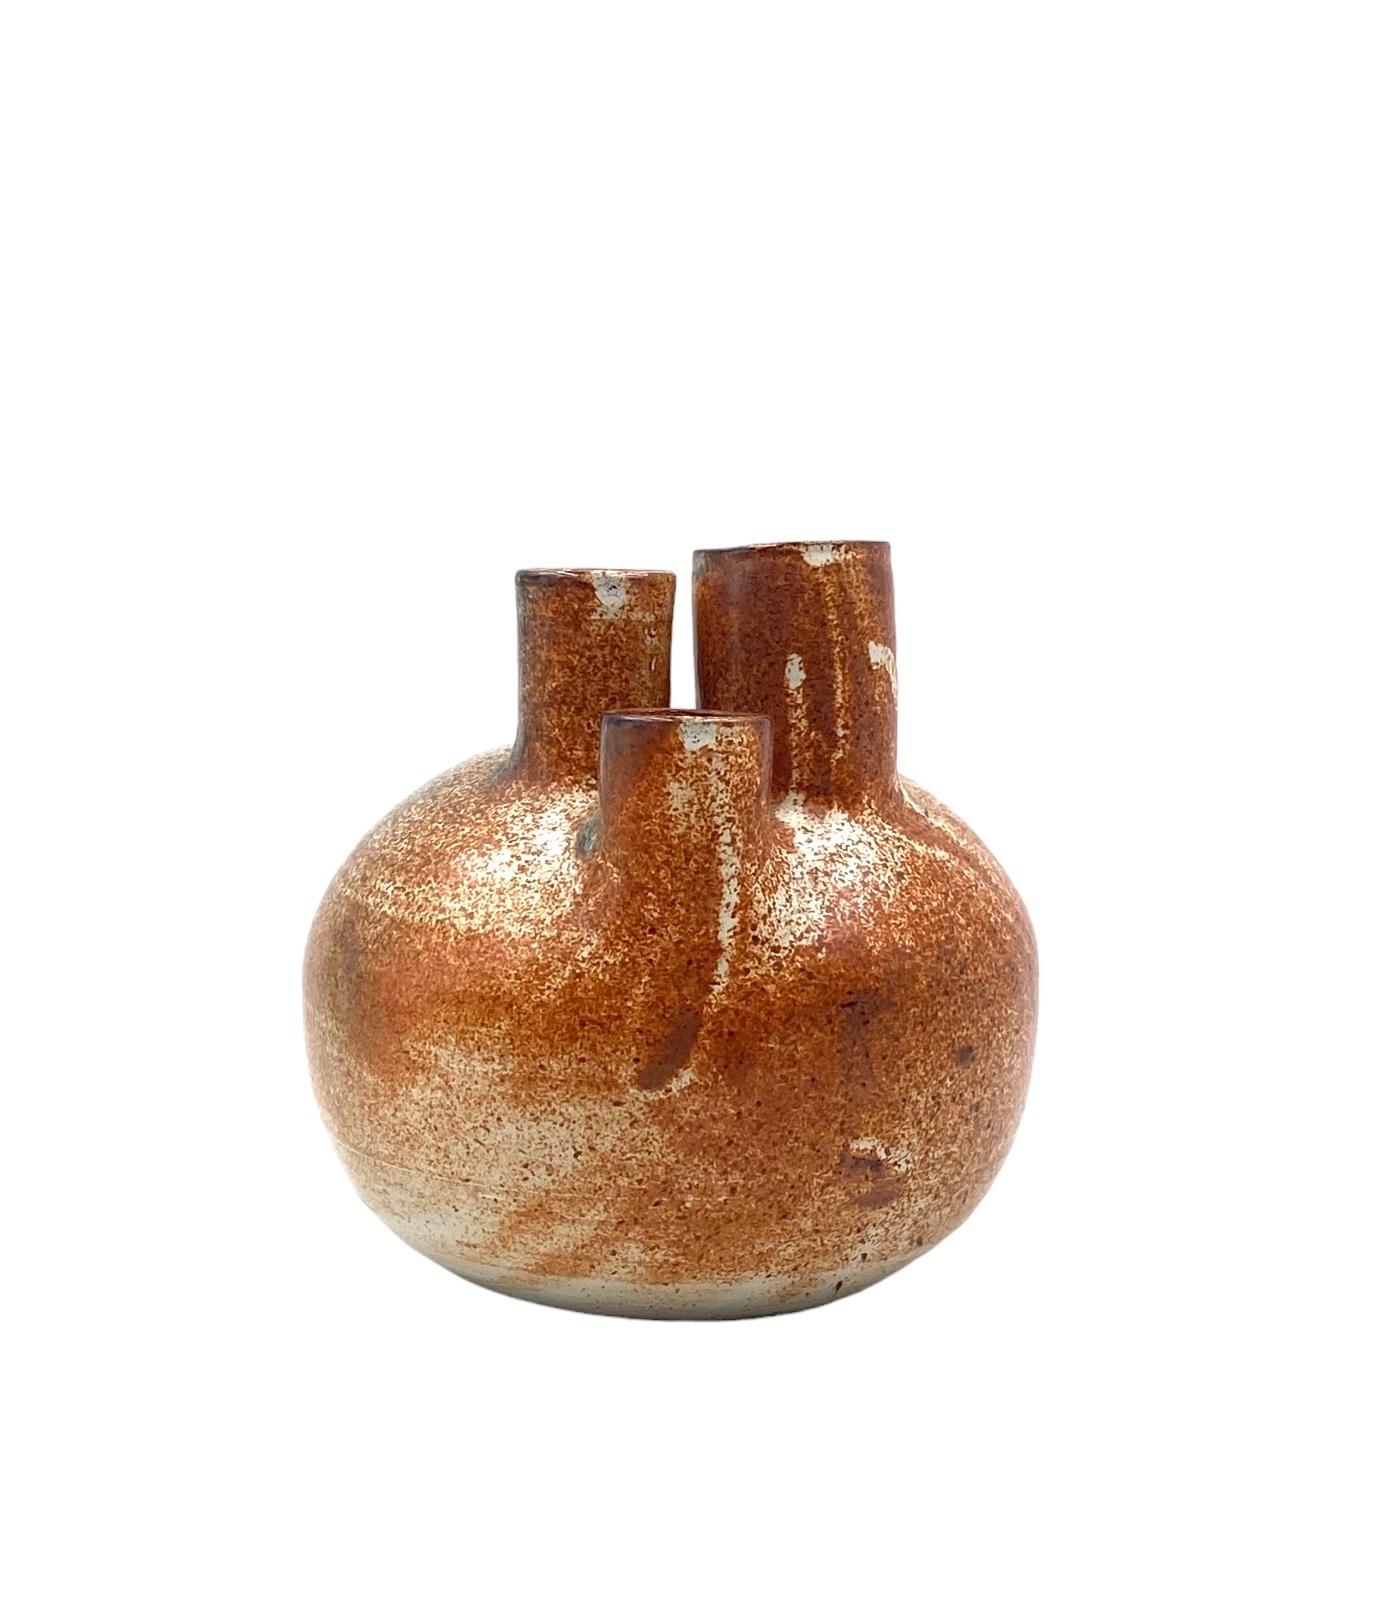 Organic modern brown earthenware vase, France 1970s For Sale 5